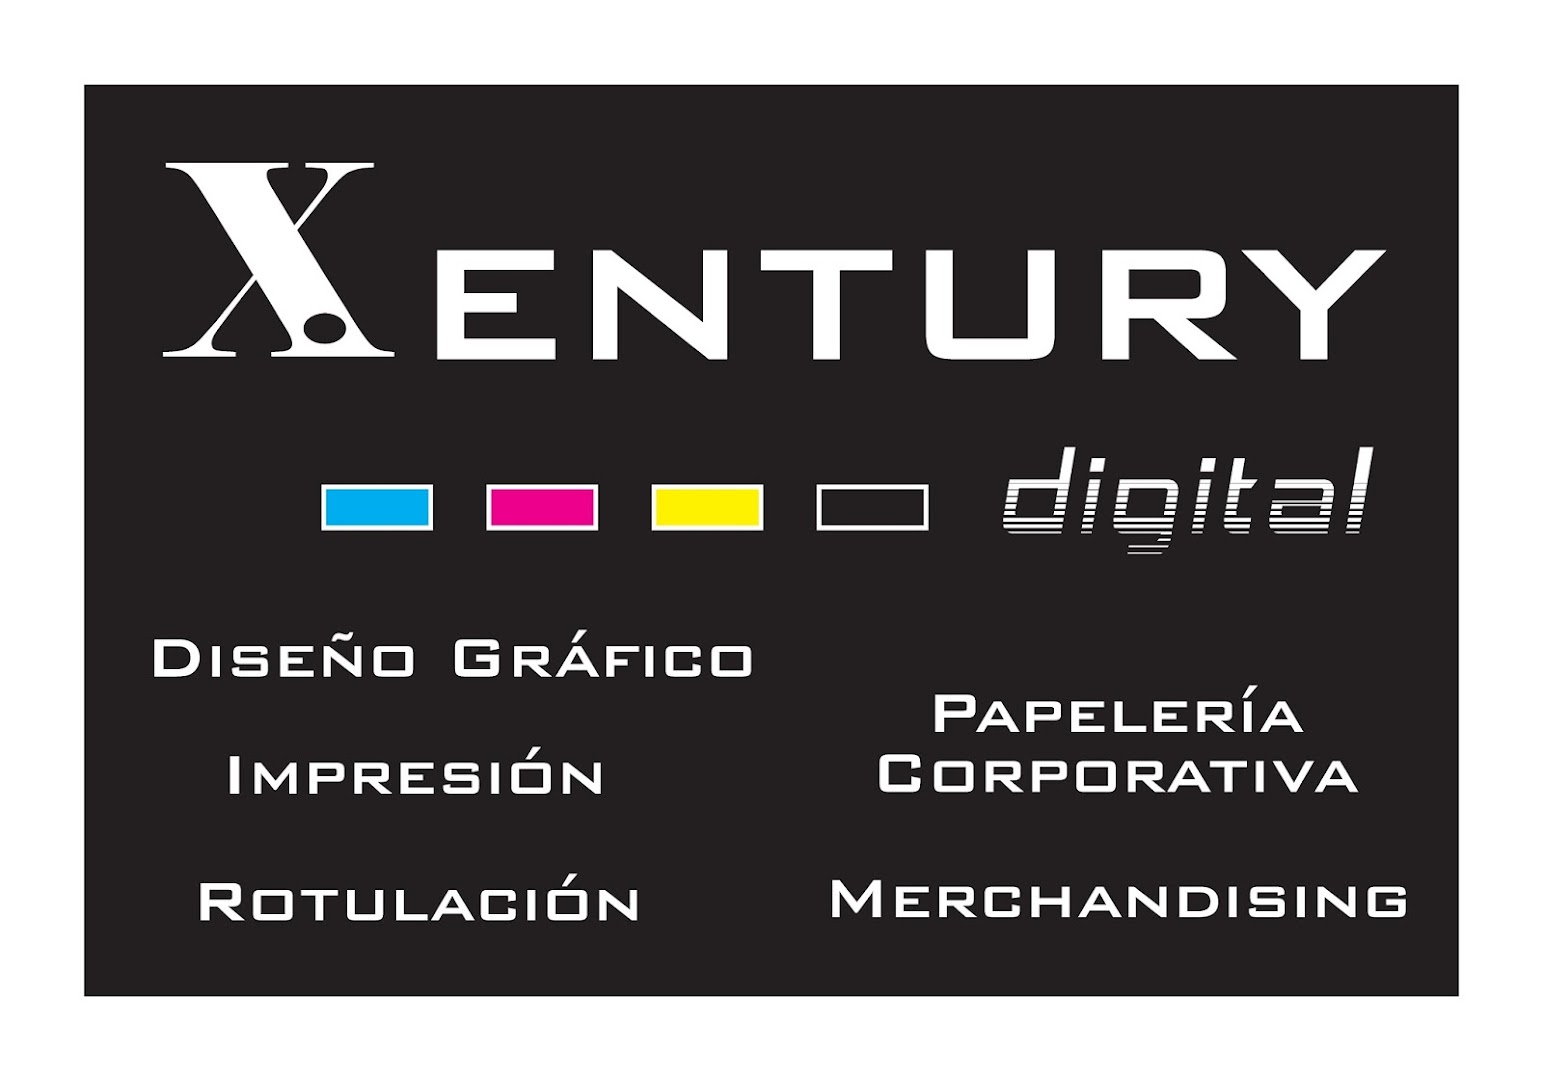 Xentury Digital